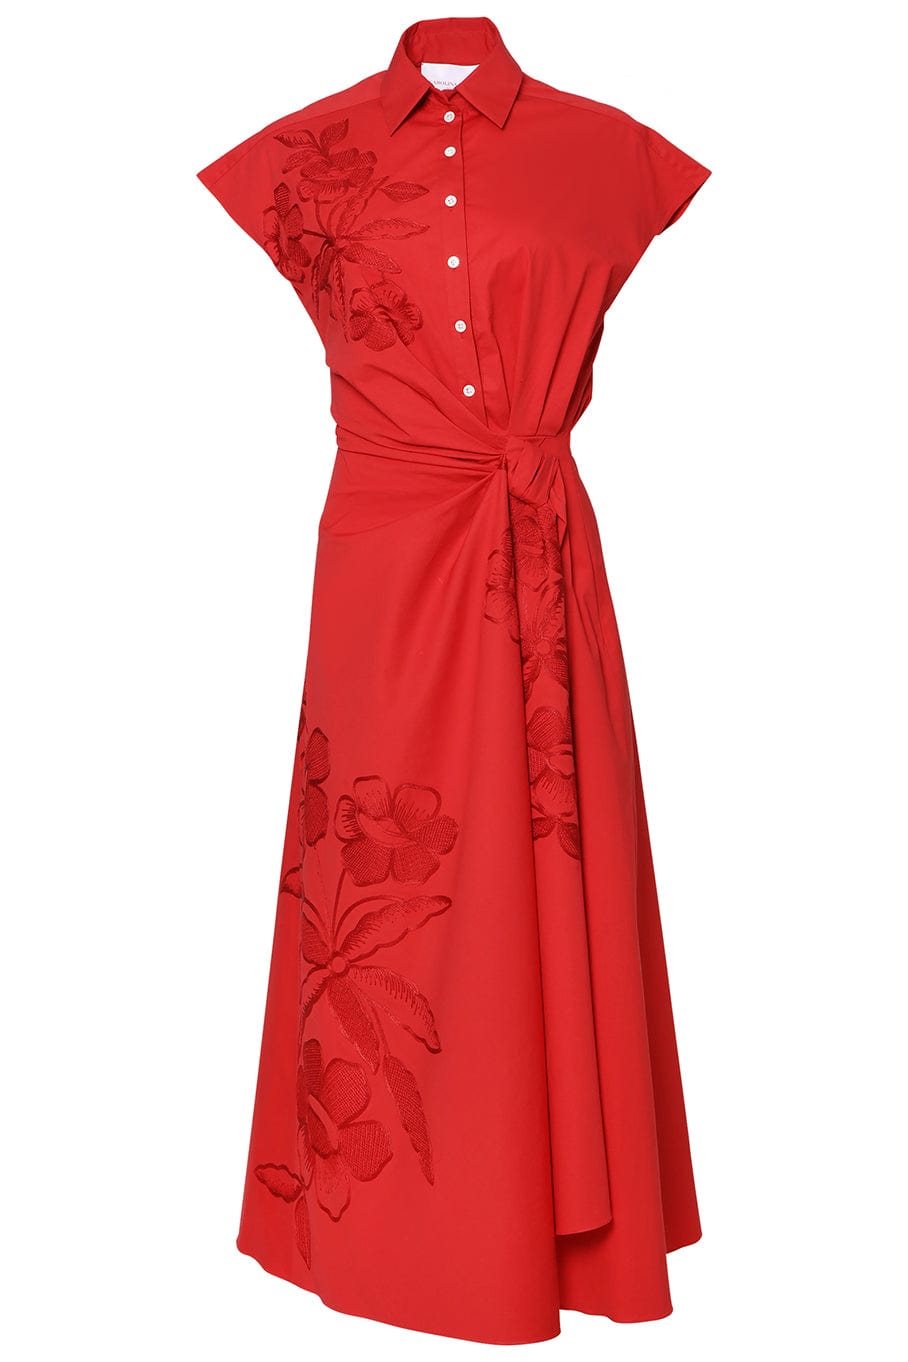 CAROLINA HERRERA-Embroidered Cap Sleeve Side Knot Dress-